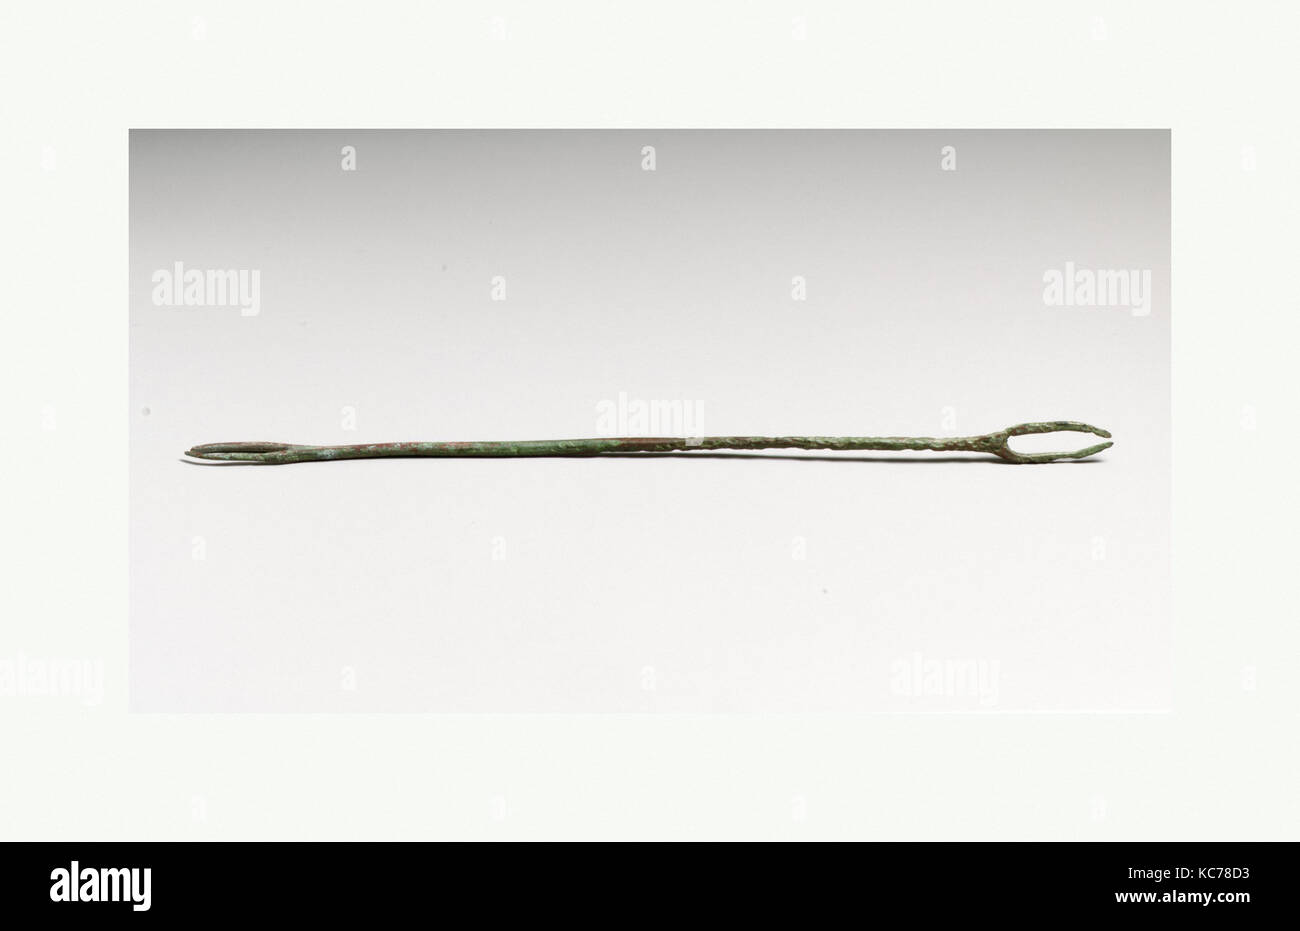 Needle, Cypriot, Bronze, Other: 7 15/16in. (20.2cm), Bronzes Stock Photo